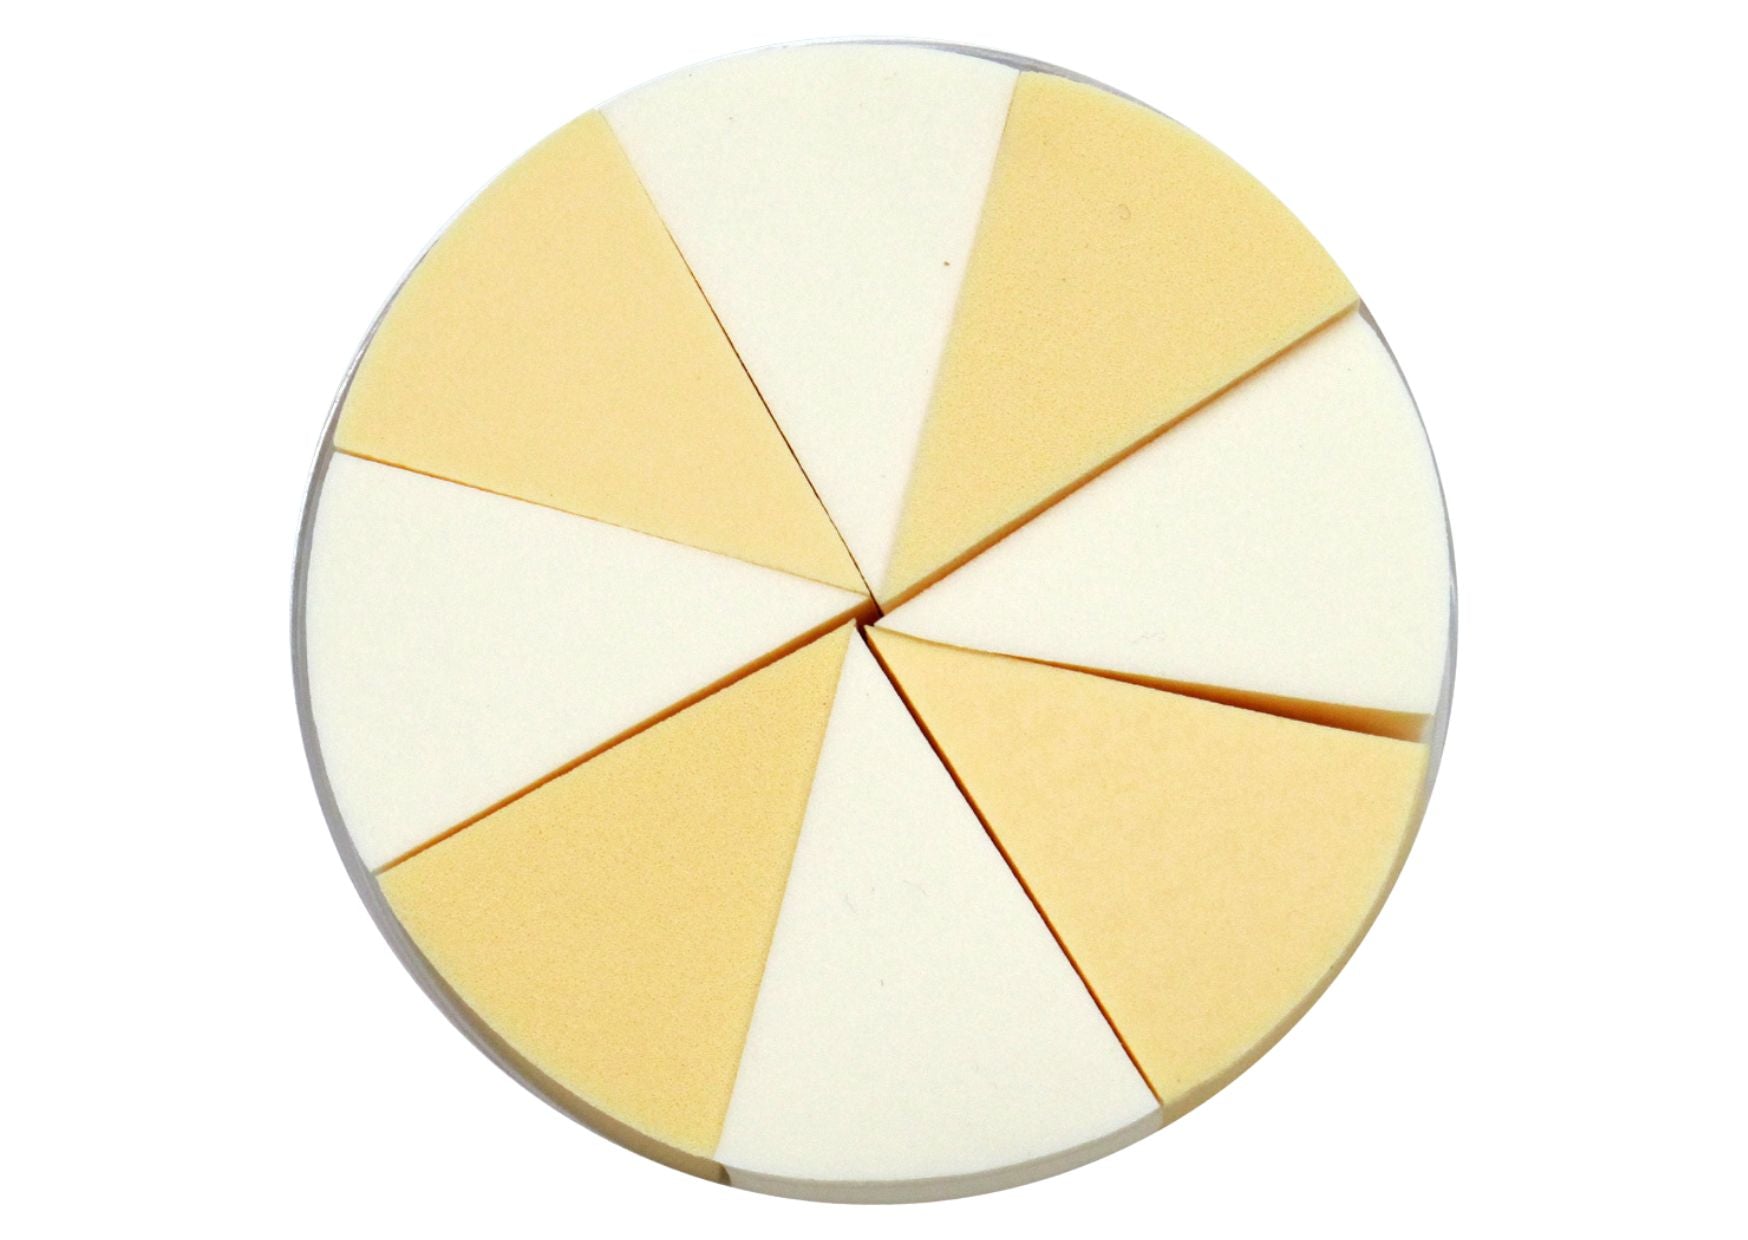 Make up wedge sponge triangle colored set of 8